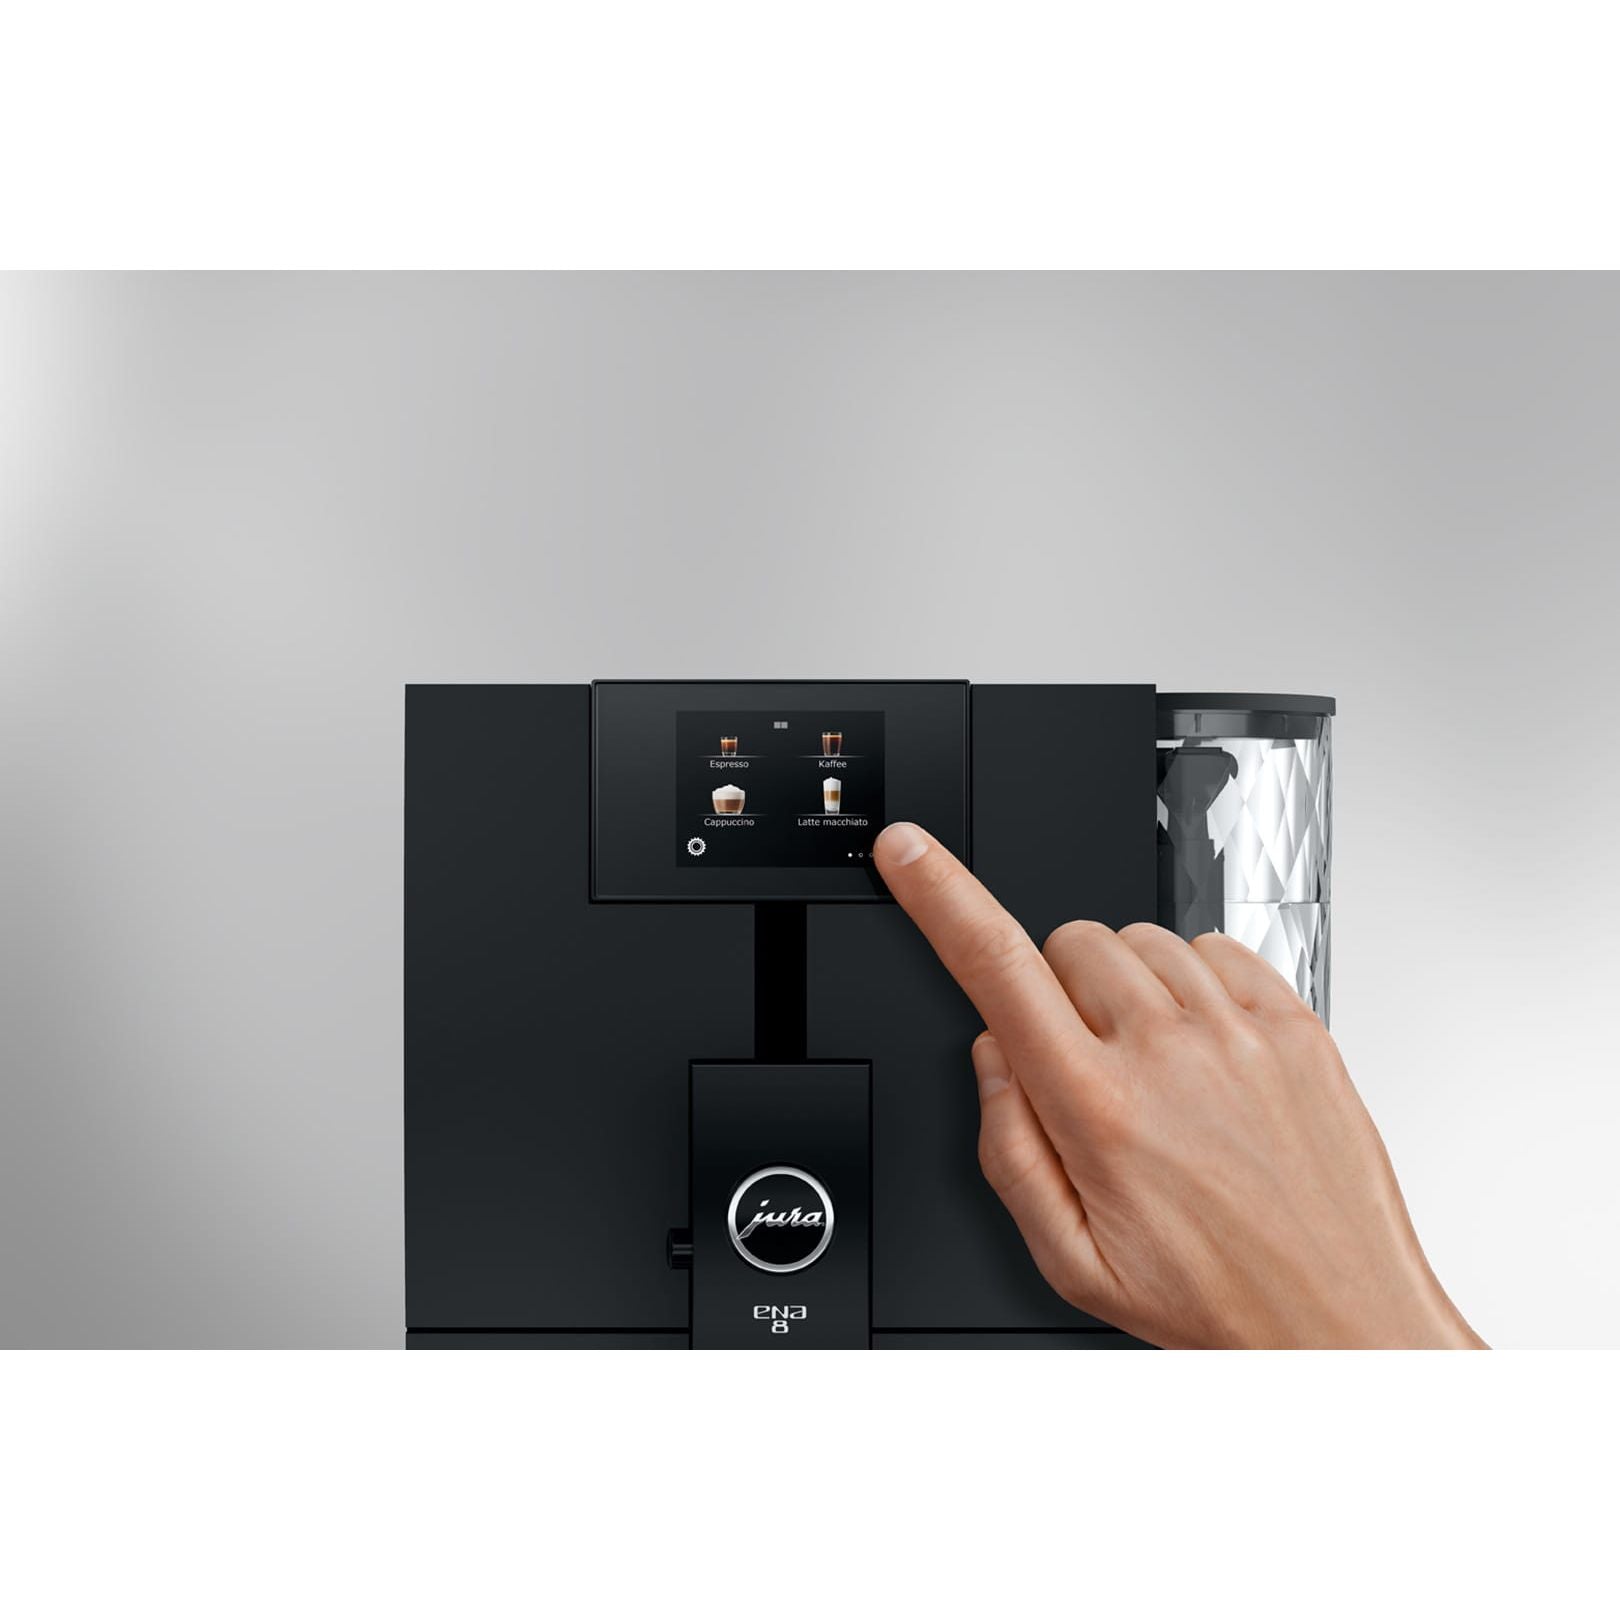 Jura Ena 8 Super Automatic Espresso Machine Metropolitan Black #15496